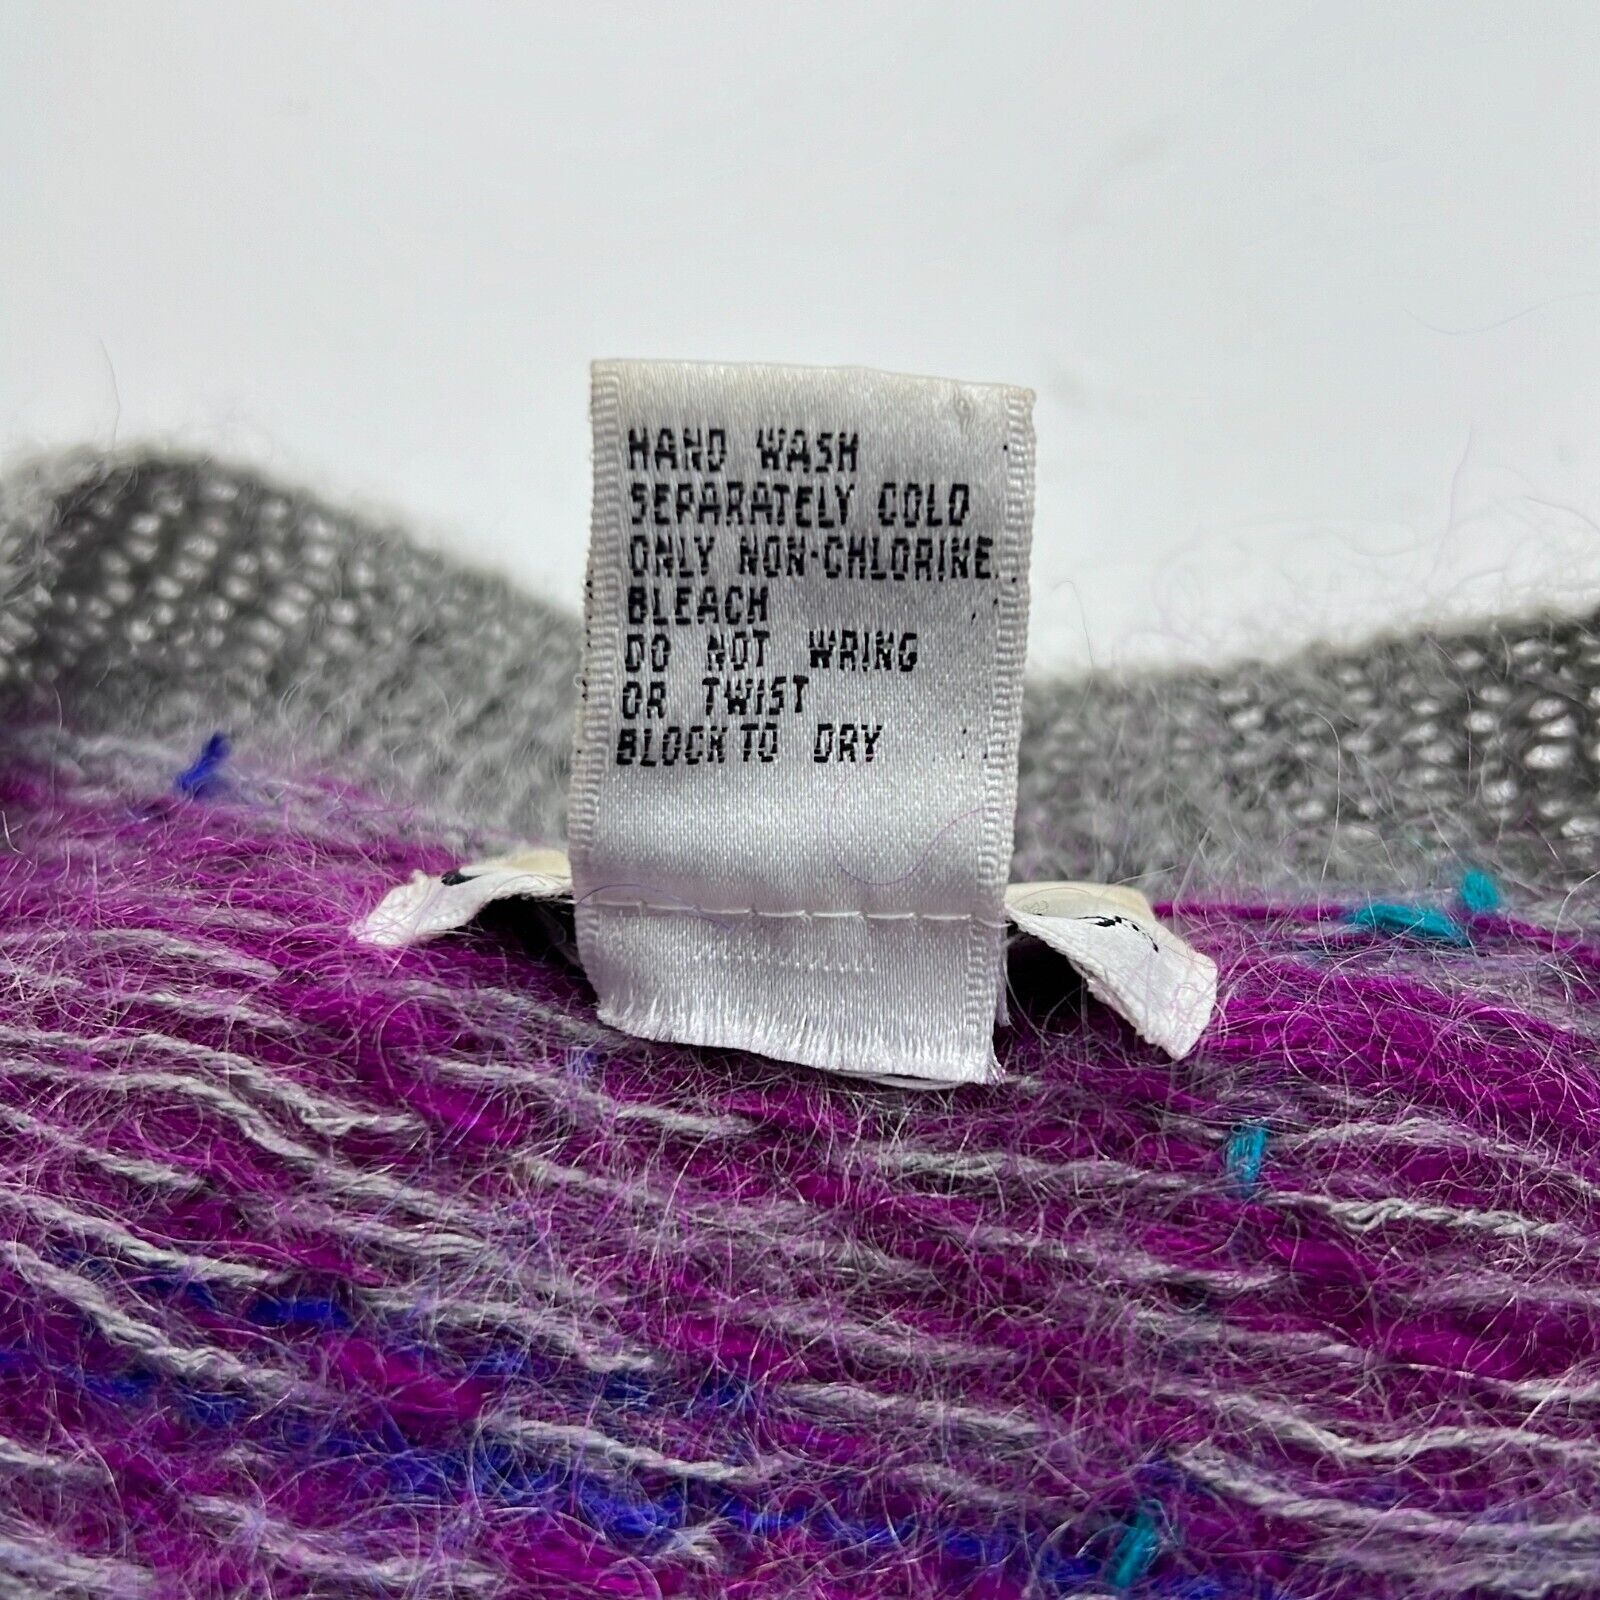 Pappagallo Women's Purple Gray Plaid Long Sleeve Cardigan Sweater Size Medium